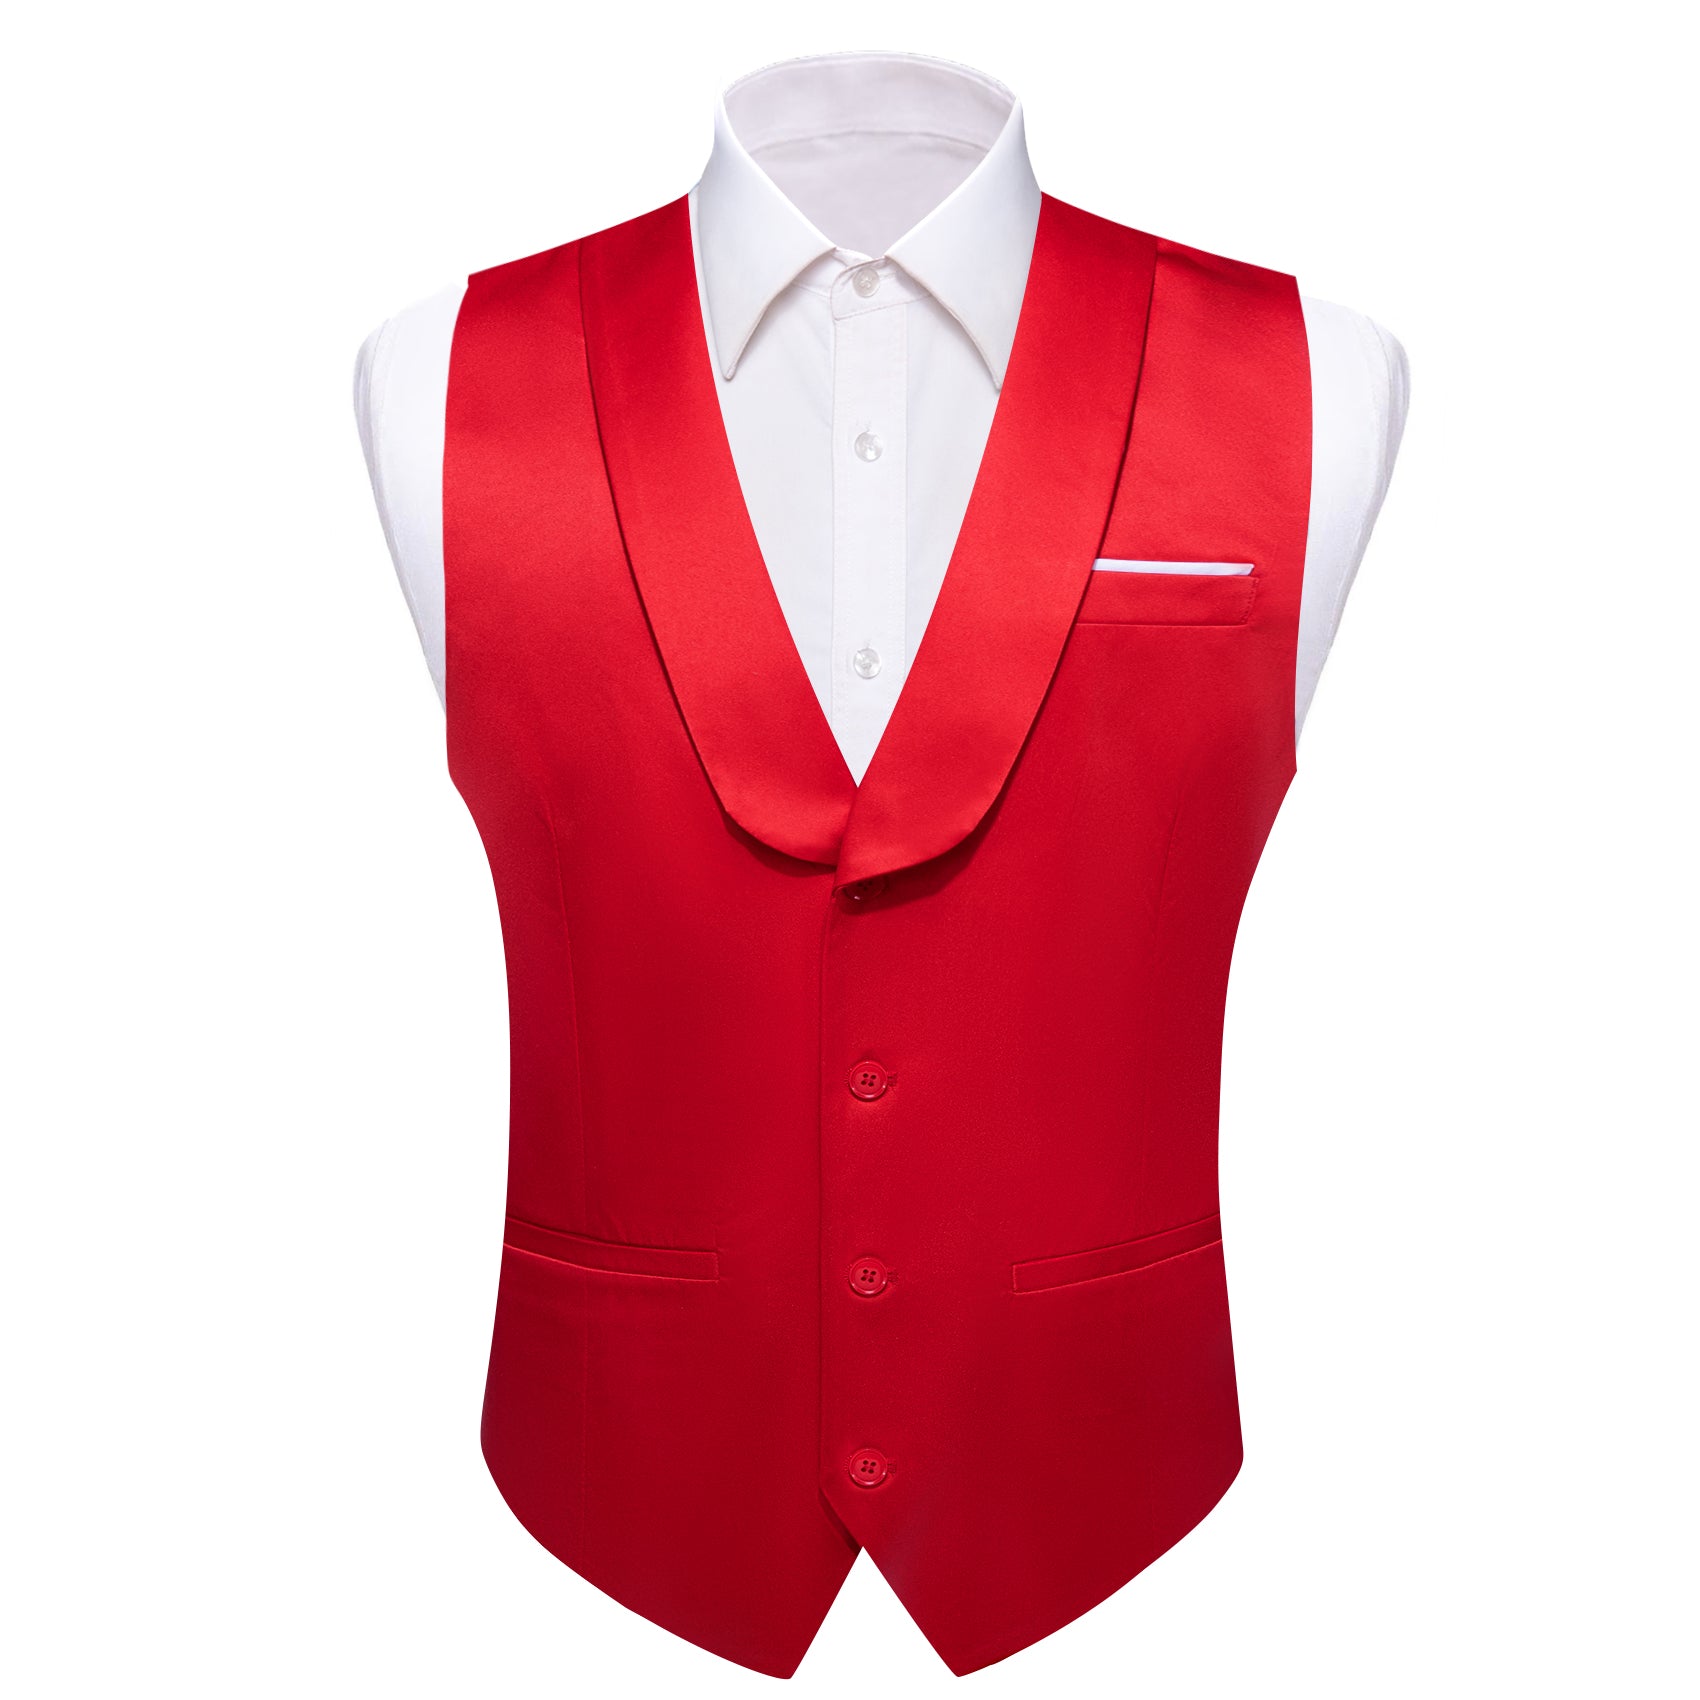 Barry.wang Novetly Red Solid Vest Waistcoat Set